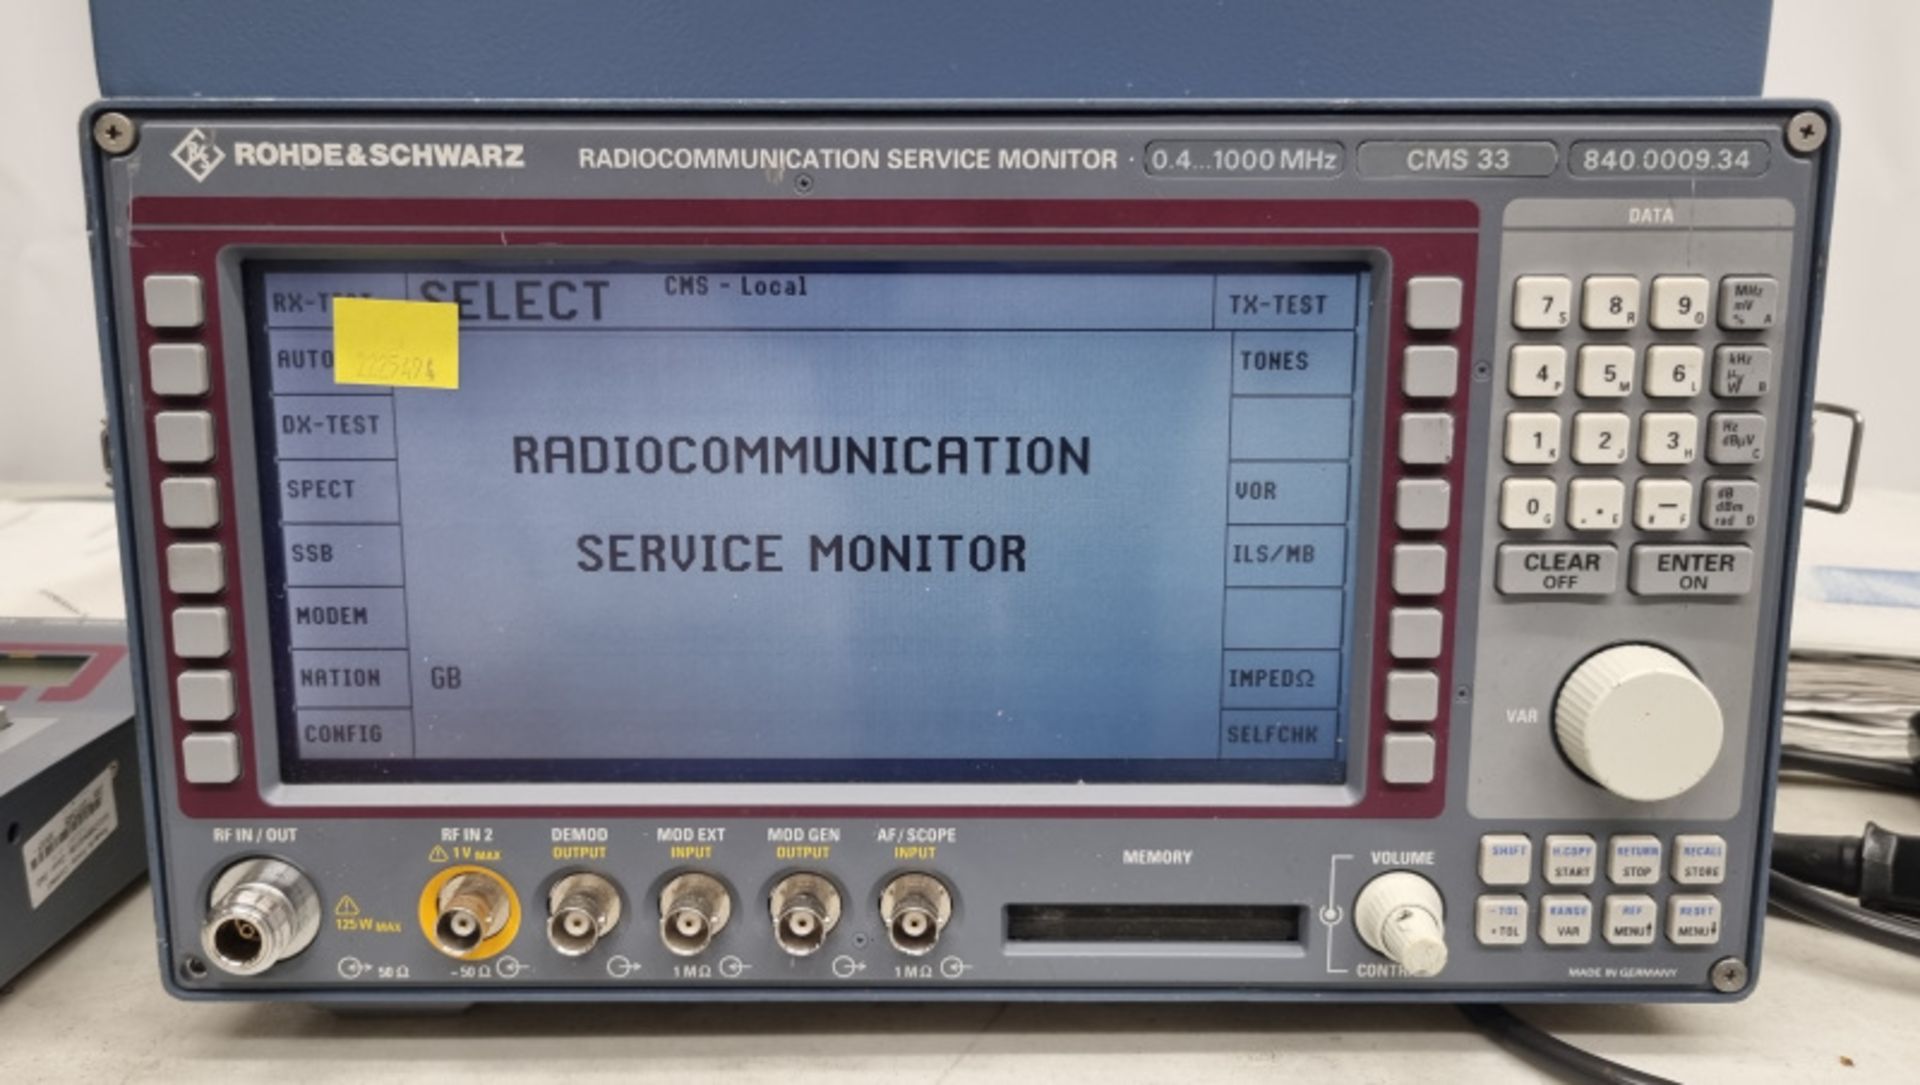 Rohde & Schwarz CMS33 Radiocommunication Service Monitor 0.4 - 1000mhz - 840.0009.34 - Image 4 of 9